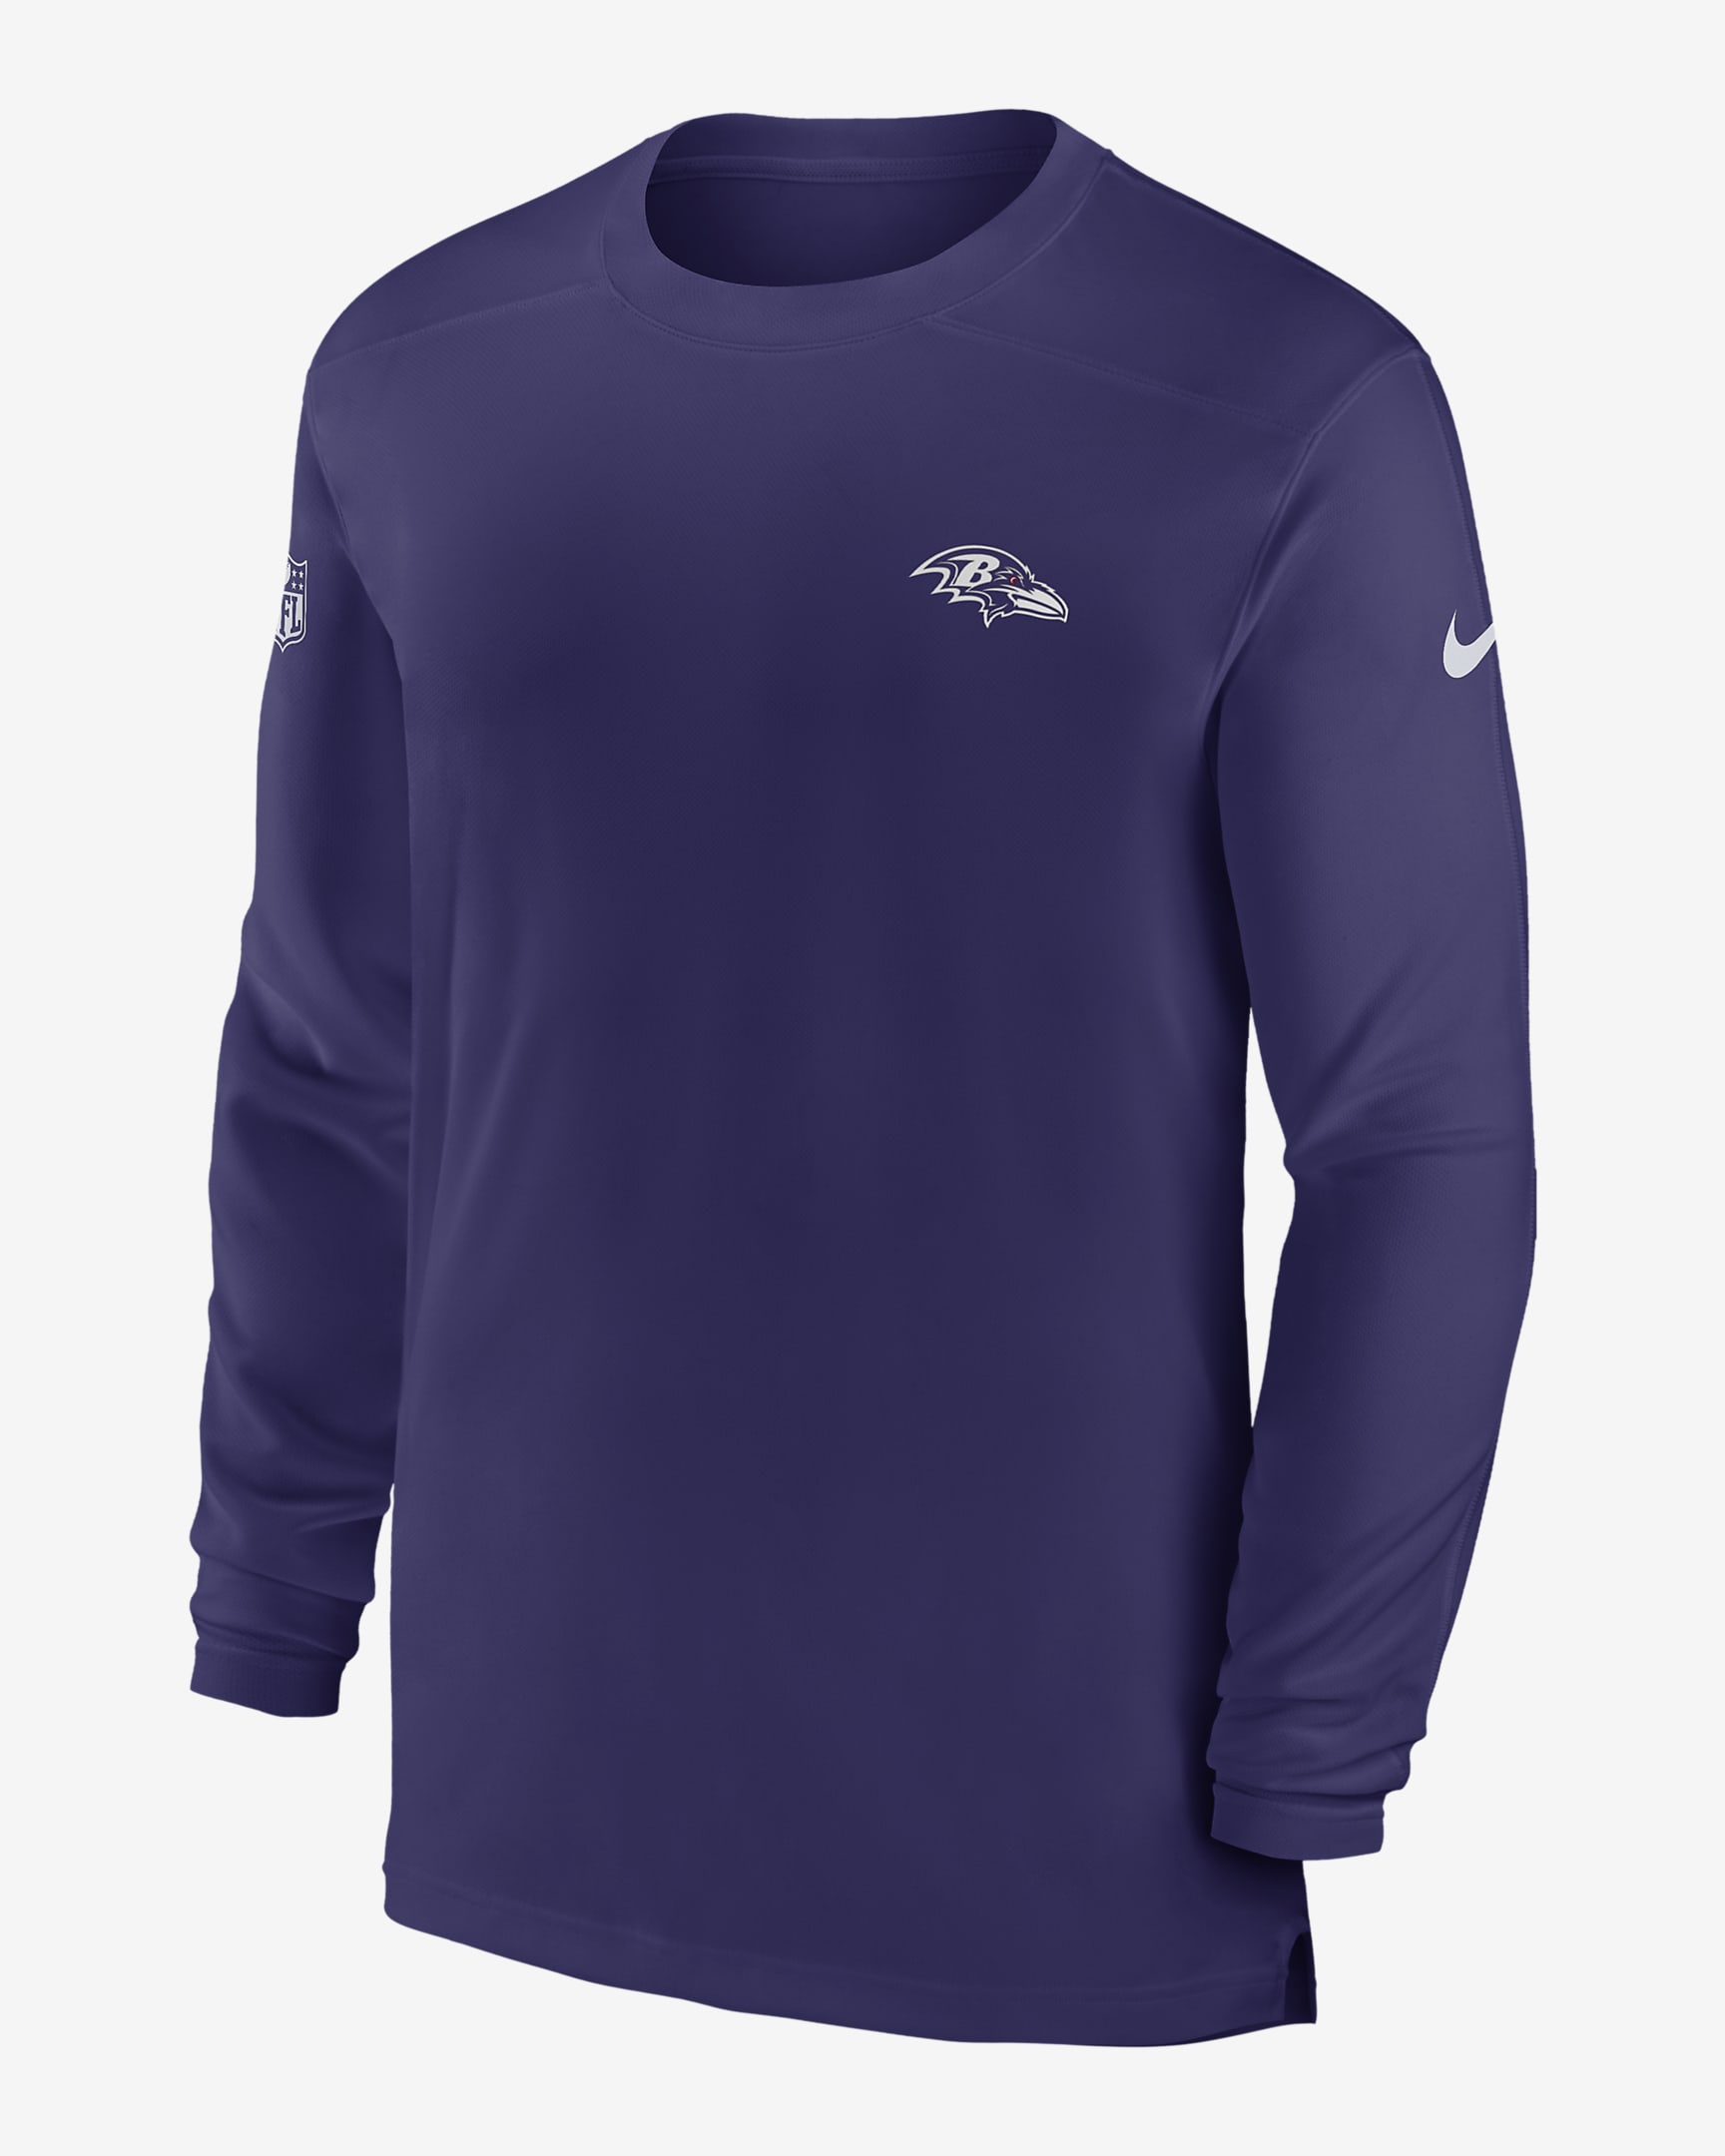 Nike Dri-FIT Sideline Coach (NFL Baltimore Ravens) Men's Long-Sleeve ...